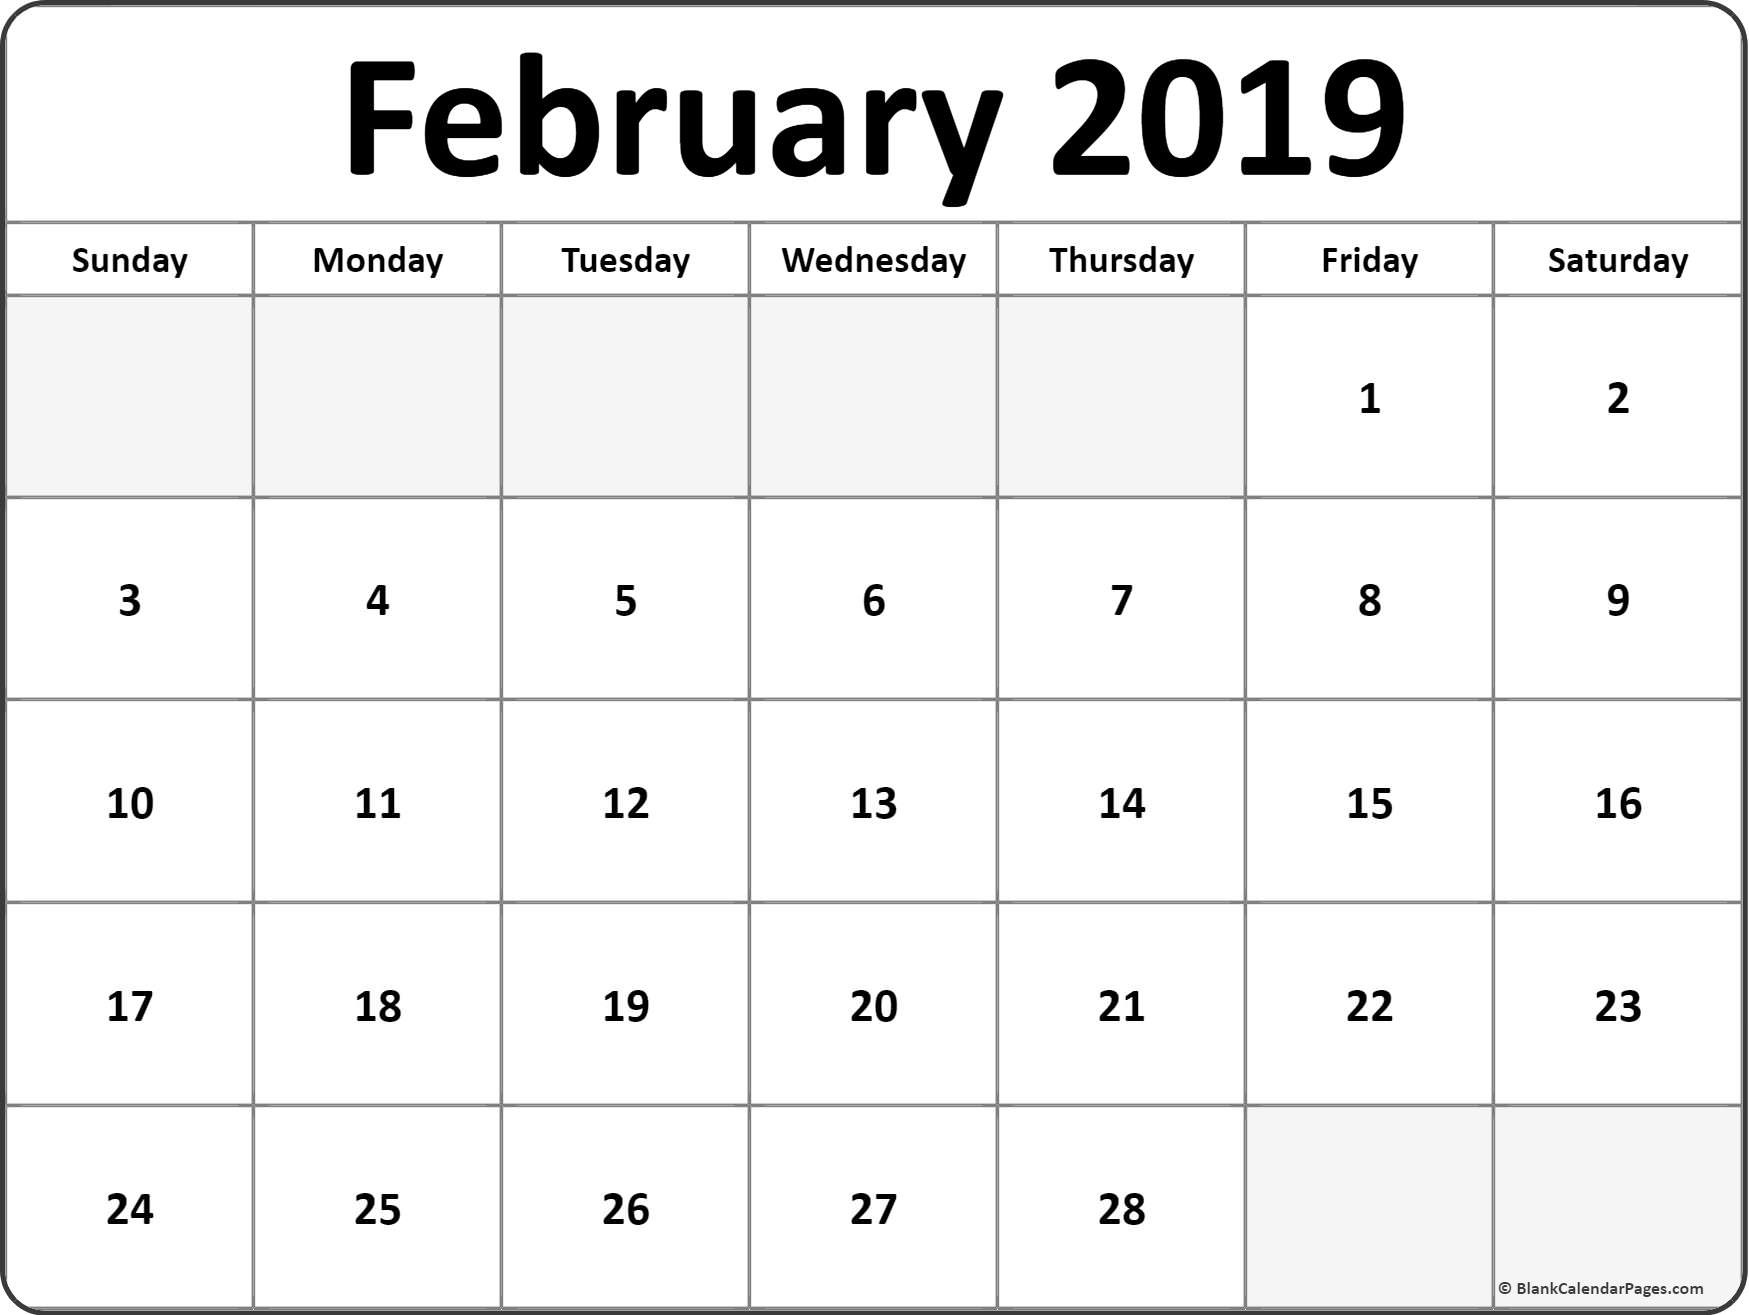 CAL=February 2019 calendar